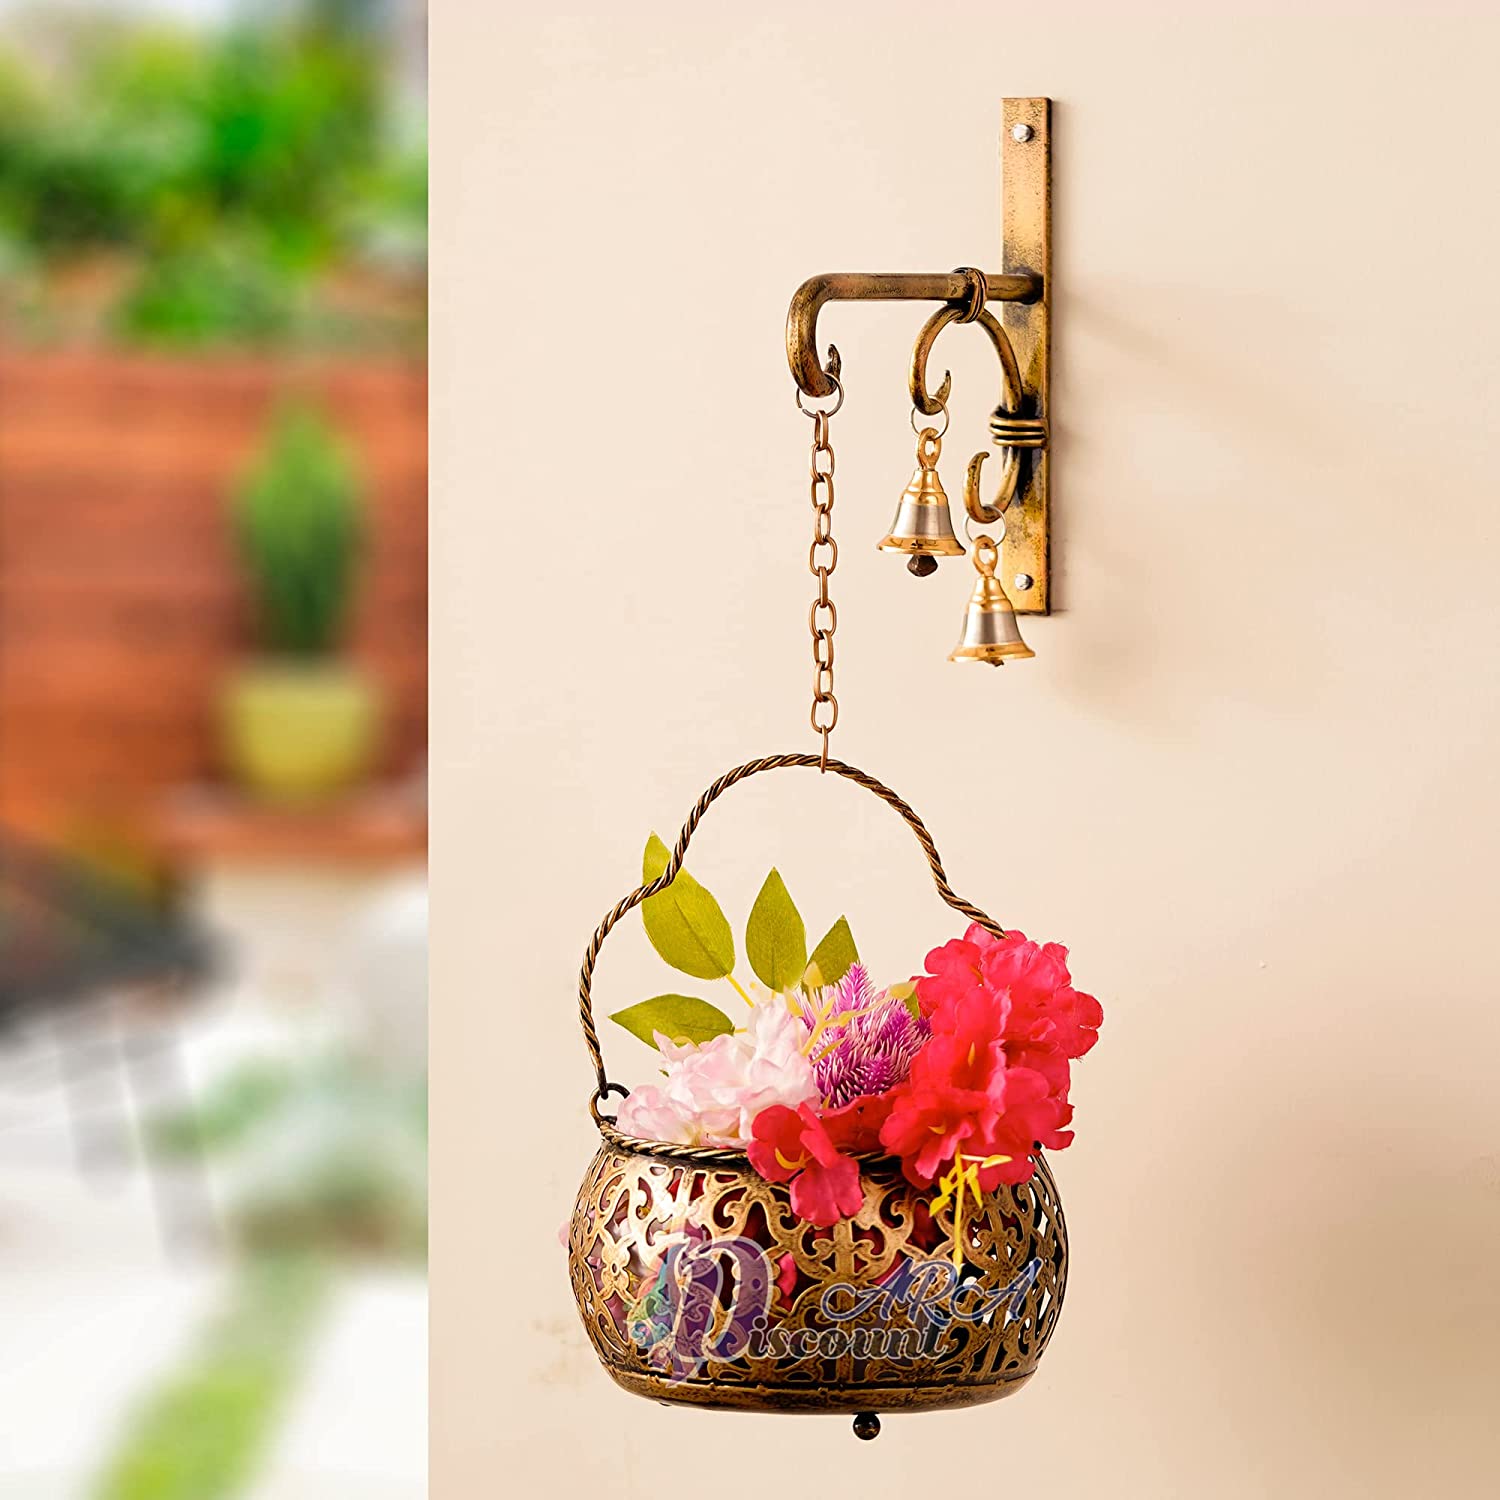 Discount ARA Flower Basket For Home Decoration